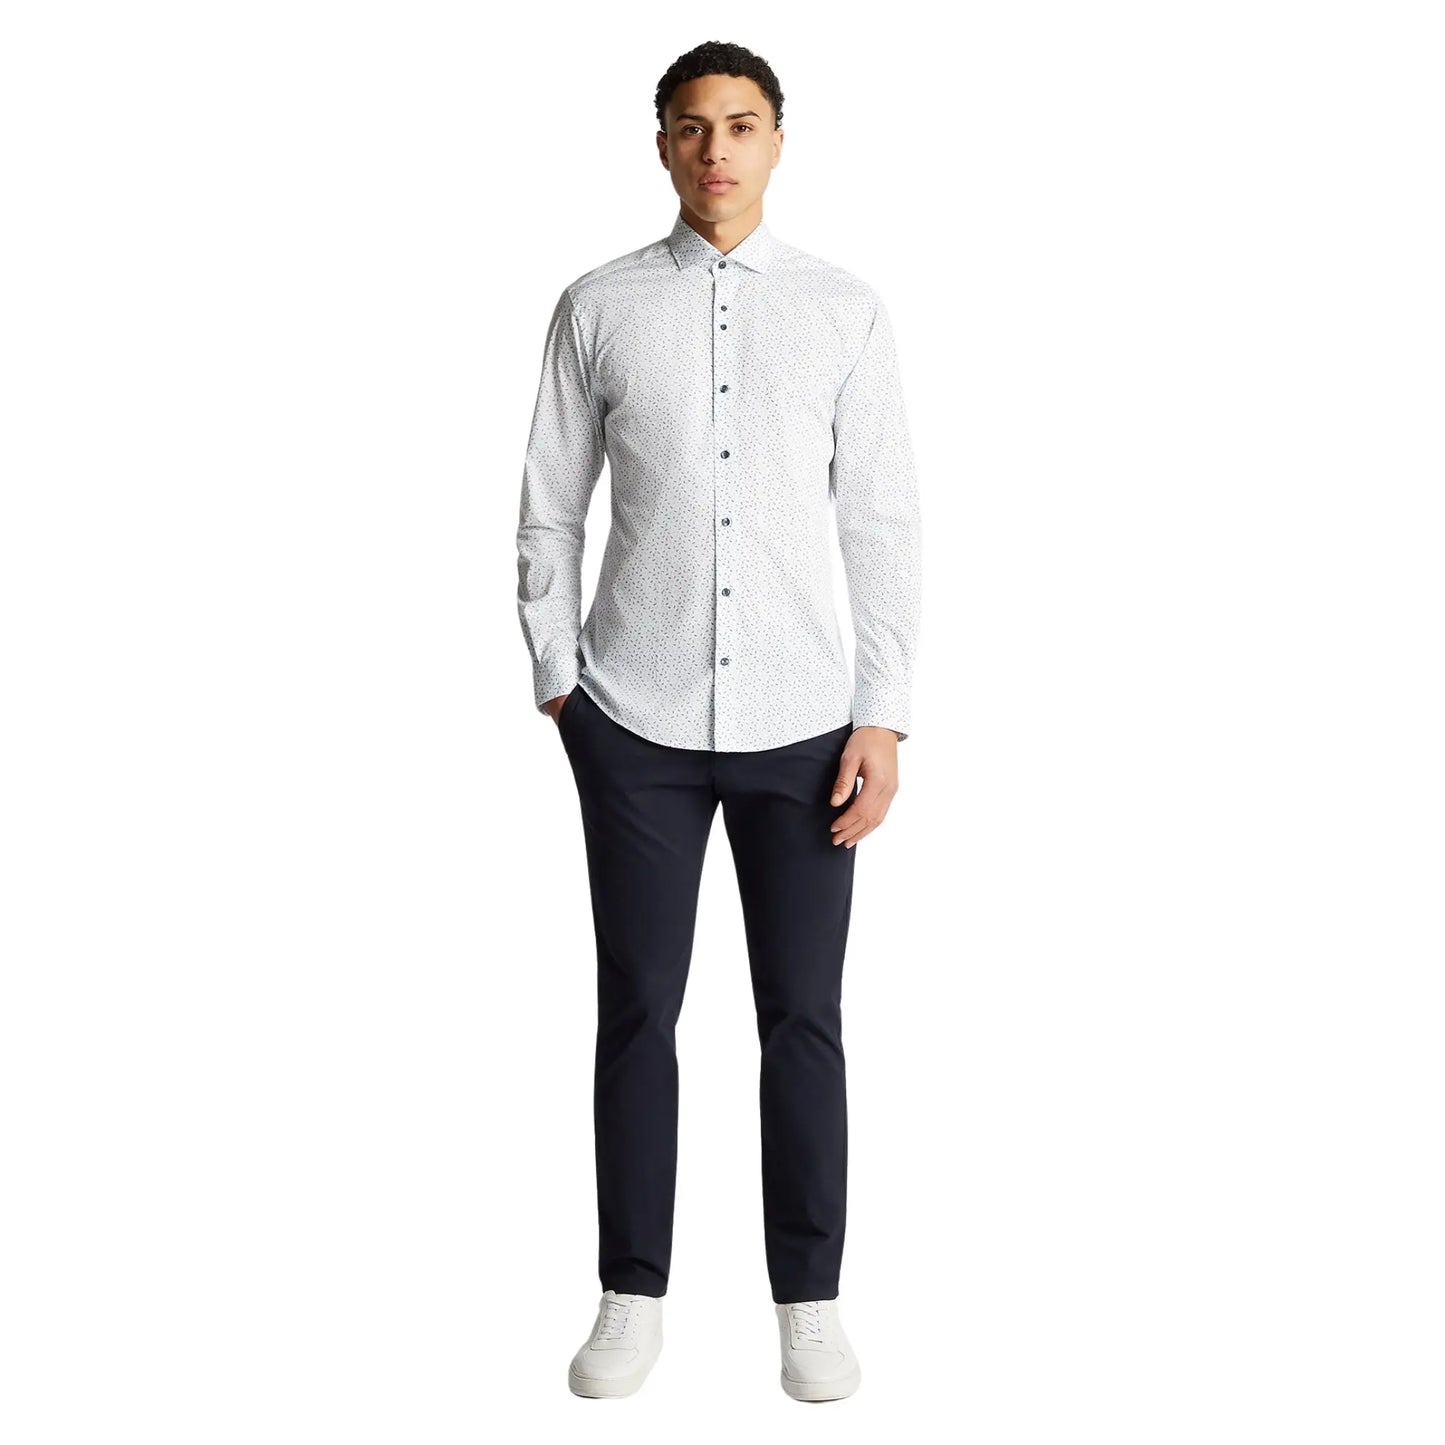 Buy Remus Uomo Frank Leaf Print Long Sleeve Shirt - Navy/White | Long-Sleeved Shirtss at Woven Durham